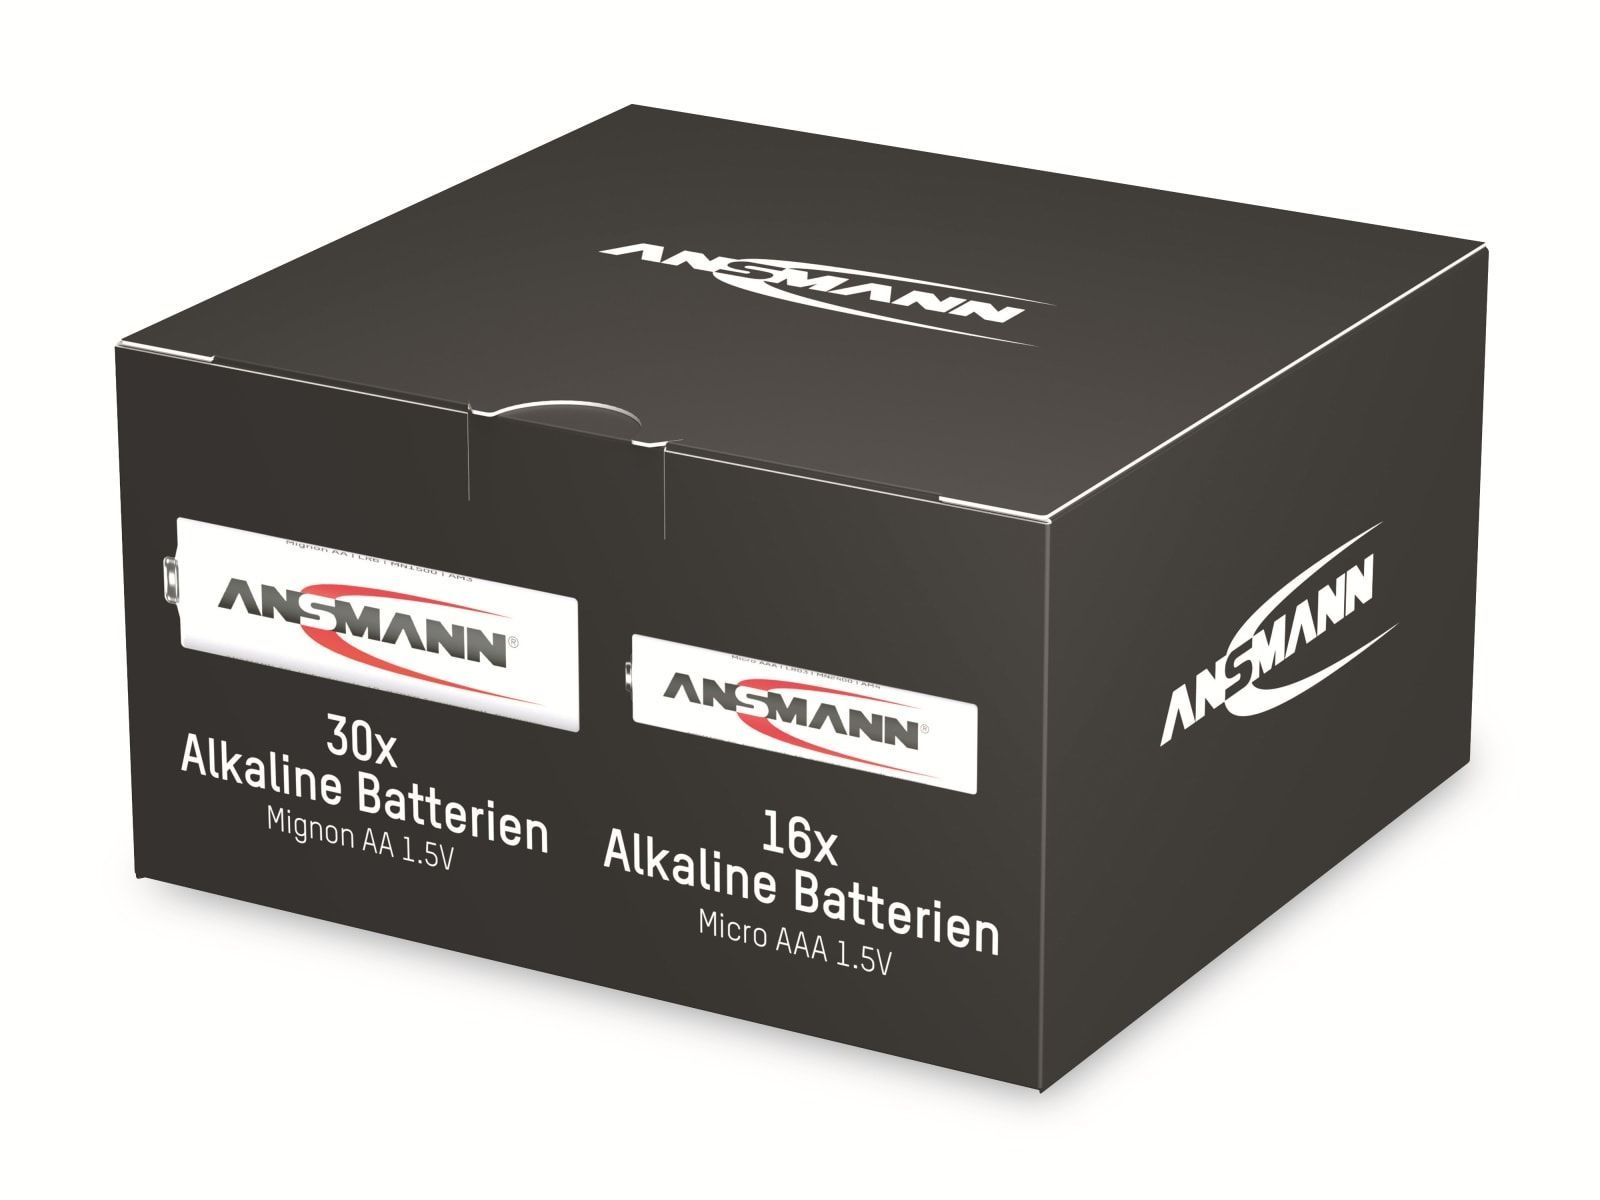 ANSMANN Batterie-Set, Alkaline, 46 Stück, Micro Batterien Alkaline 30x Mignon, 16x